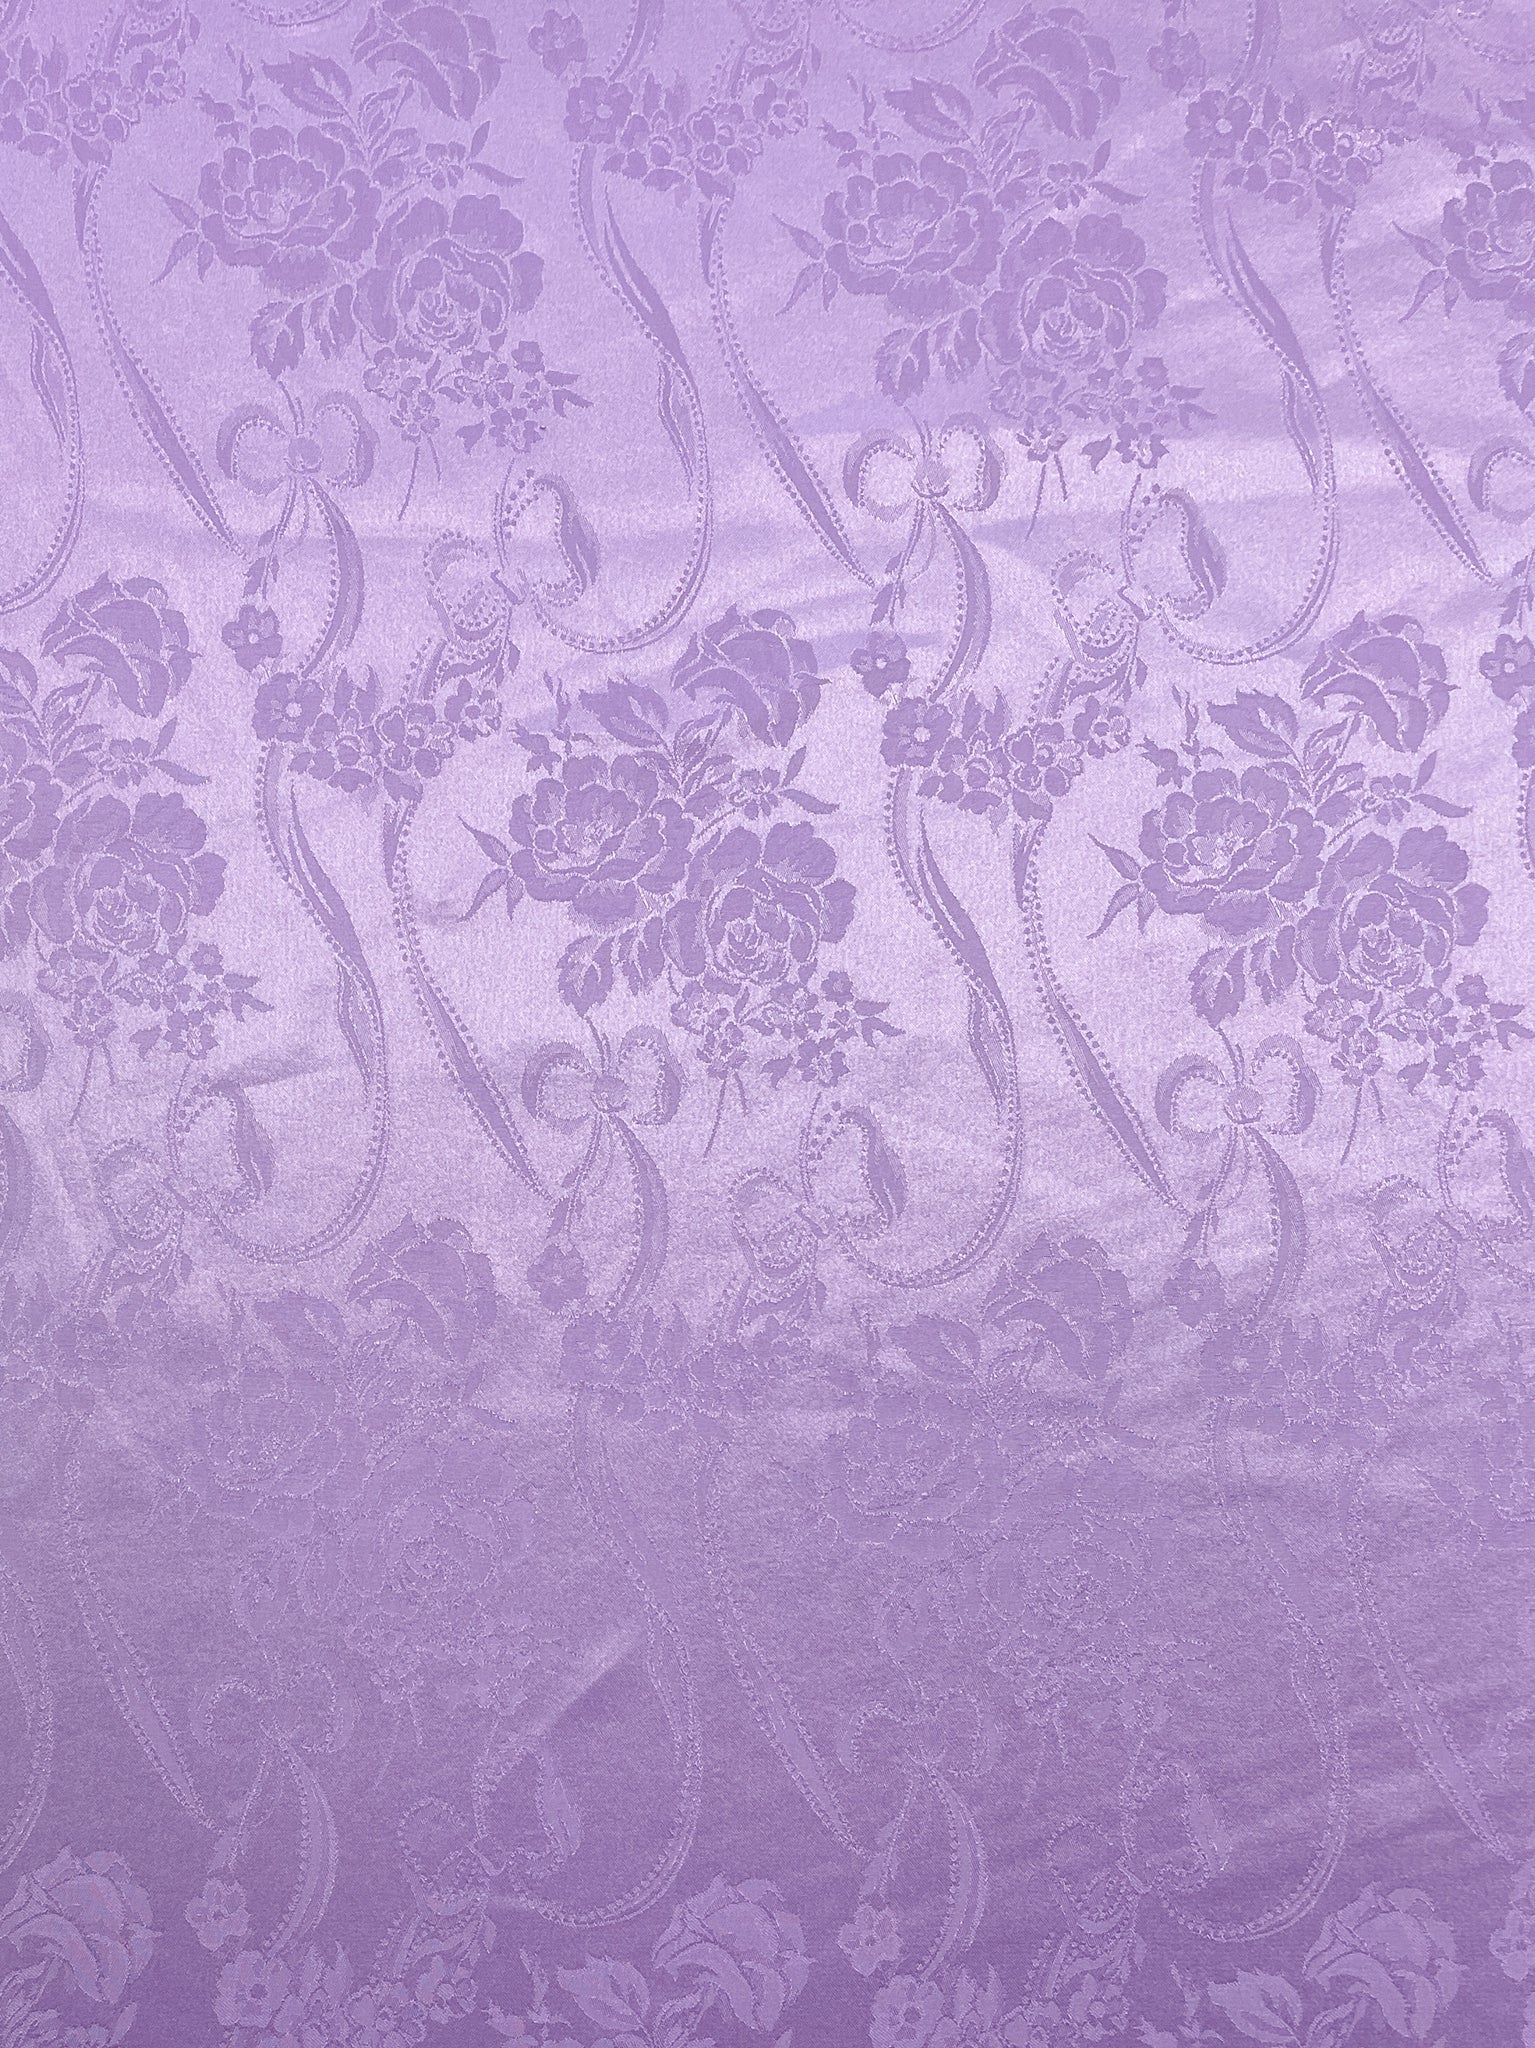 2 1/8 YD Polyester Floral Jacquard Vintage - Light Purple